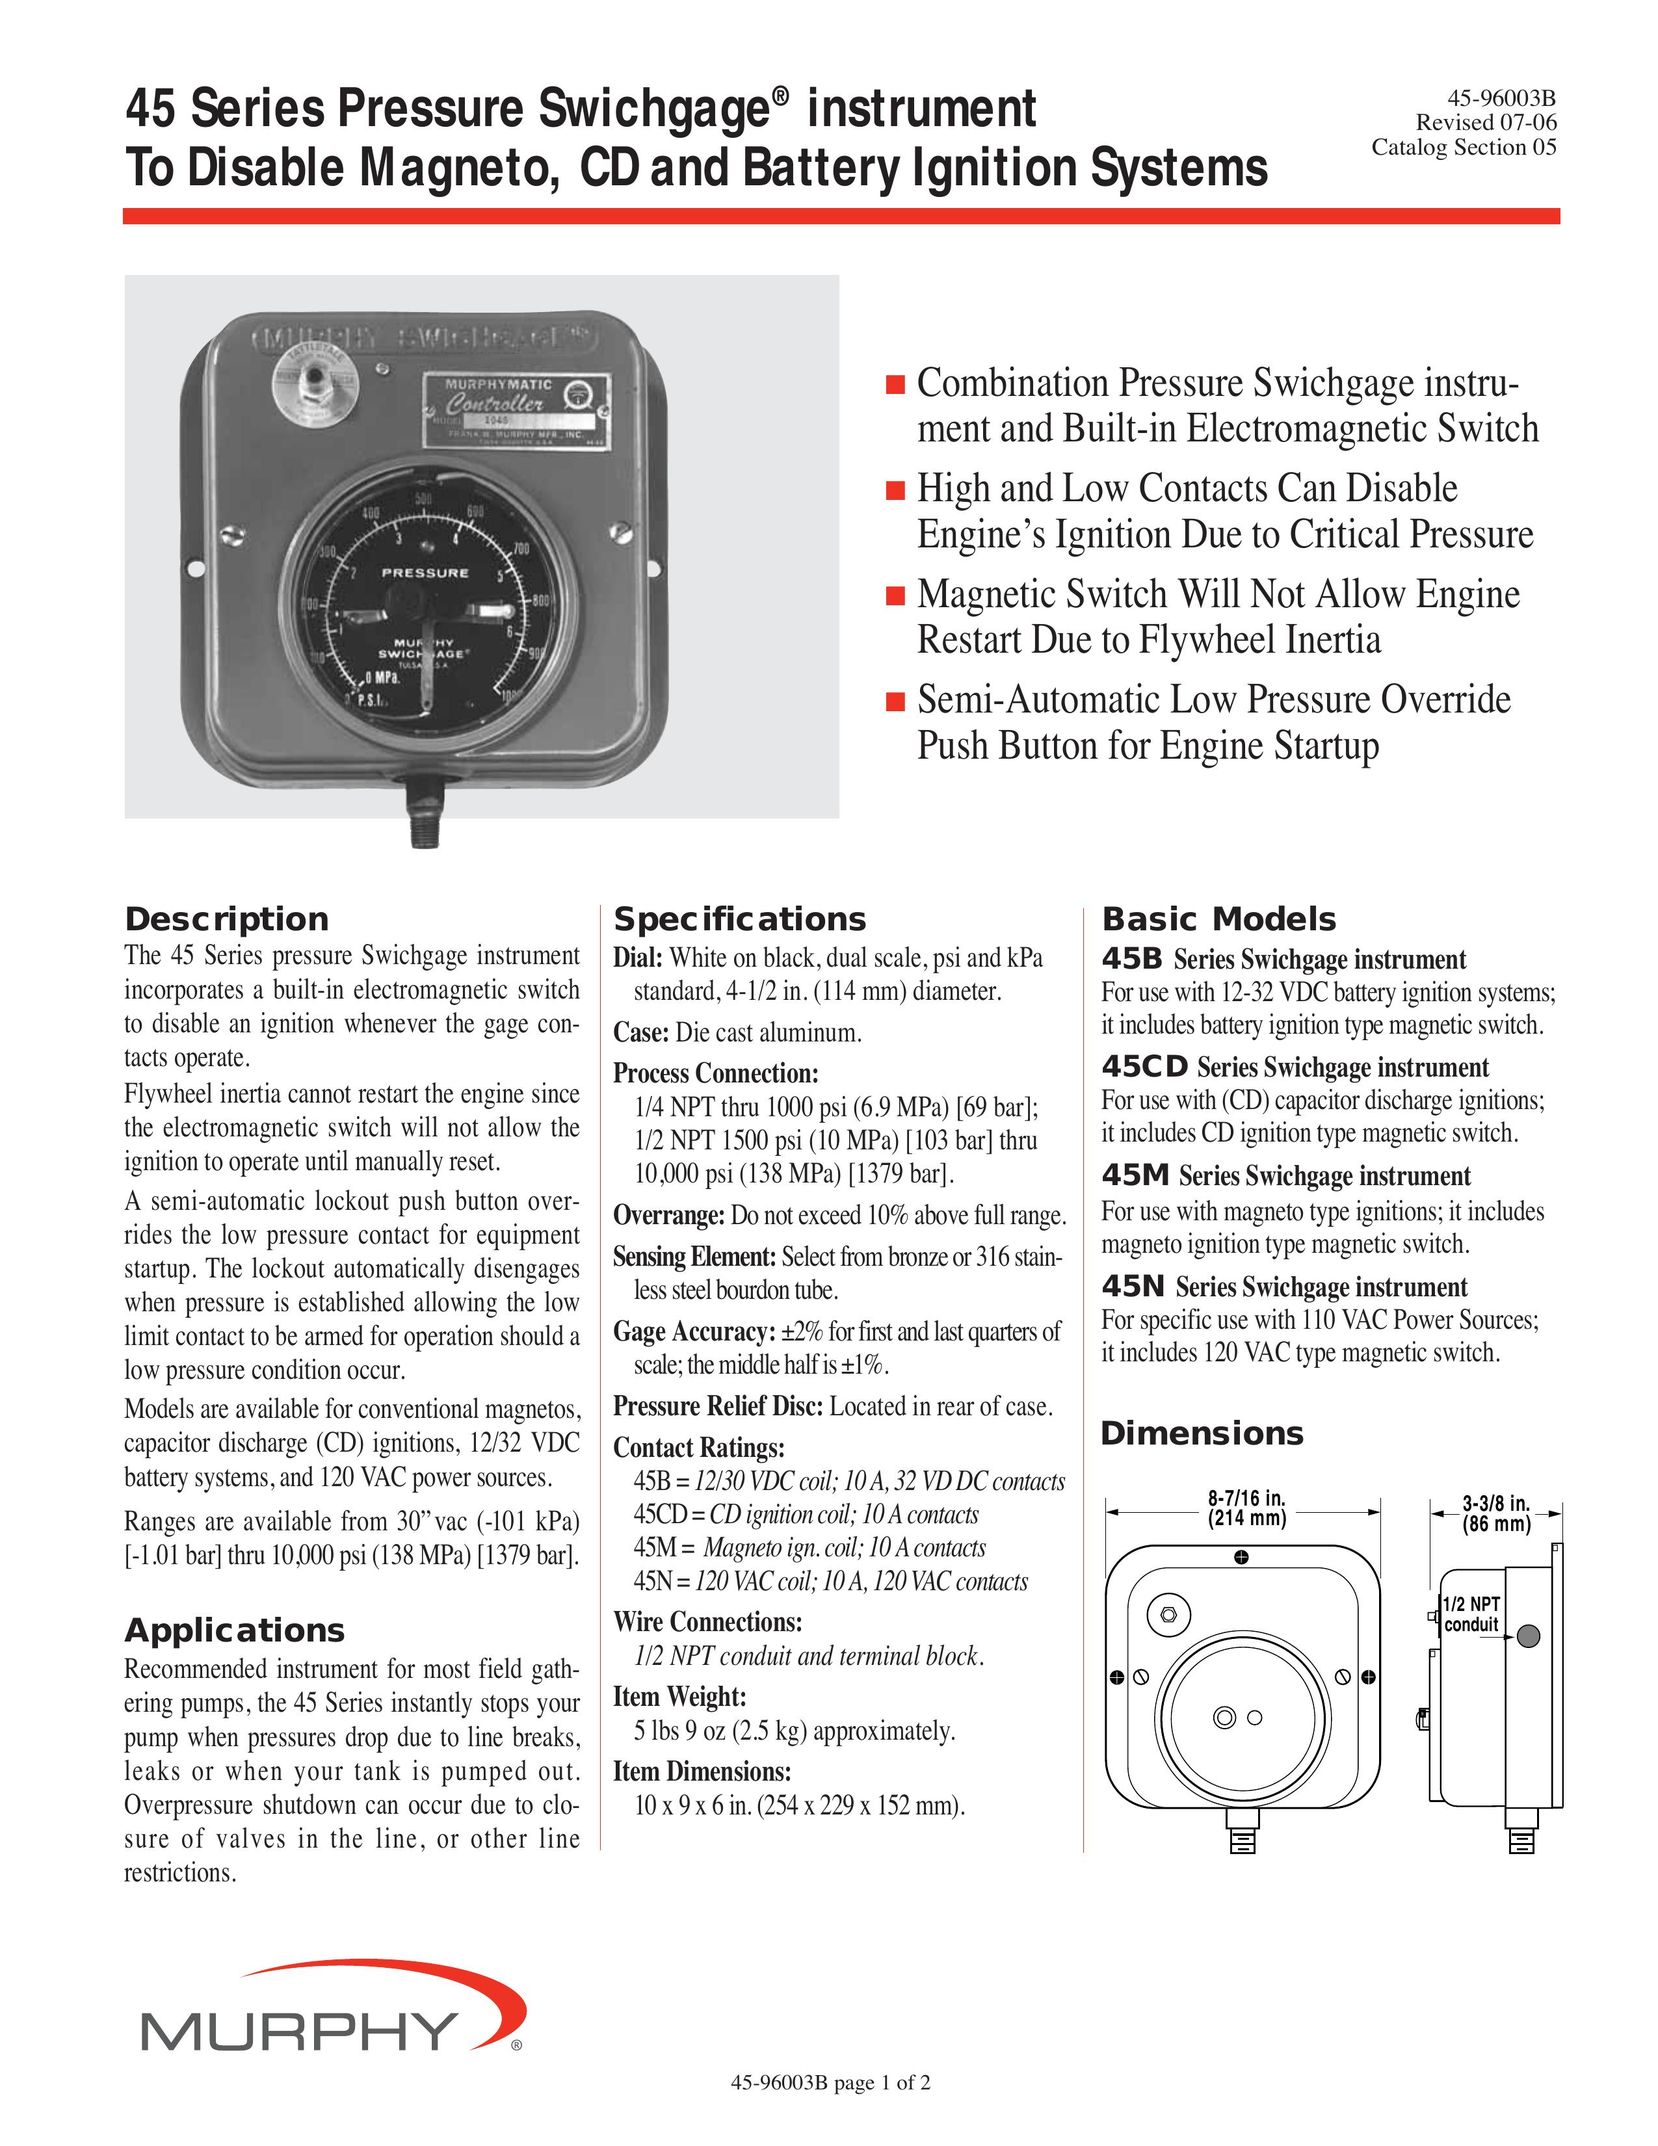 Murphy 45 Series Switch User Manual